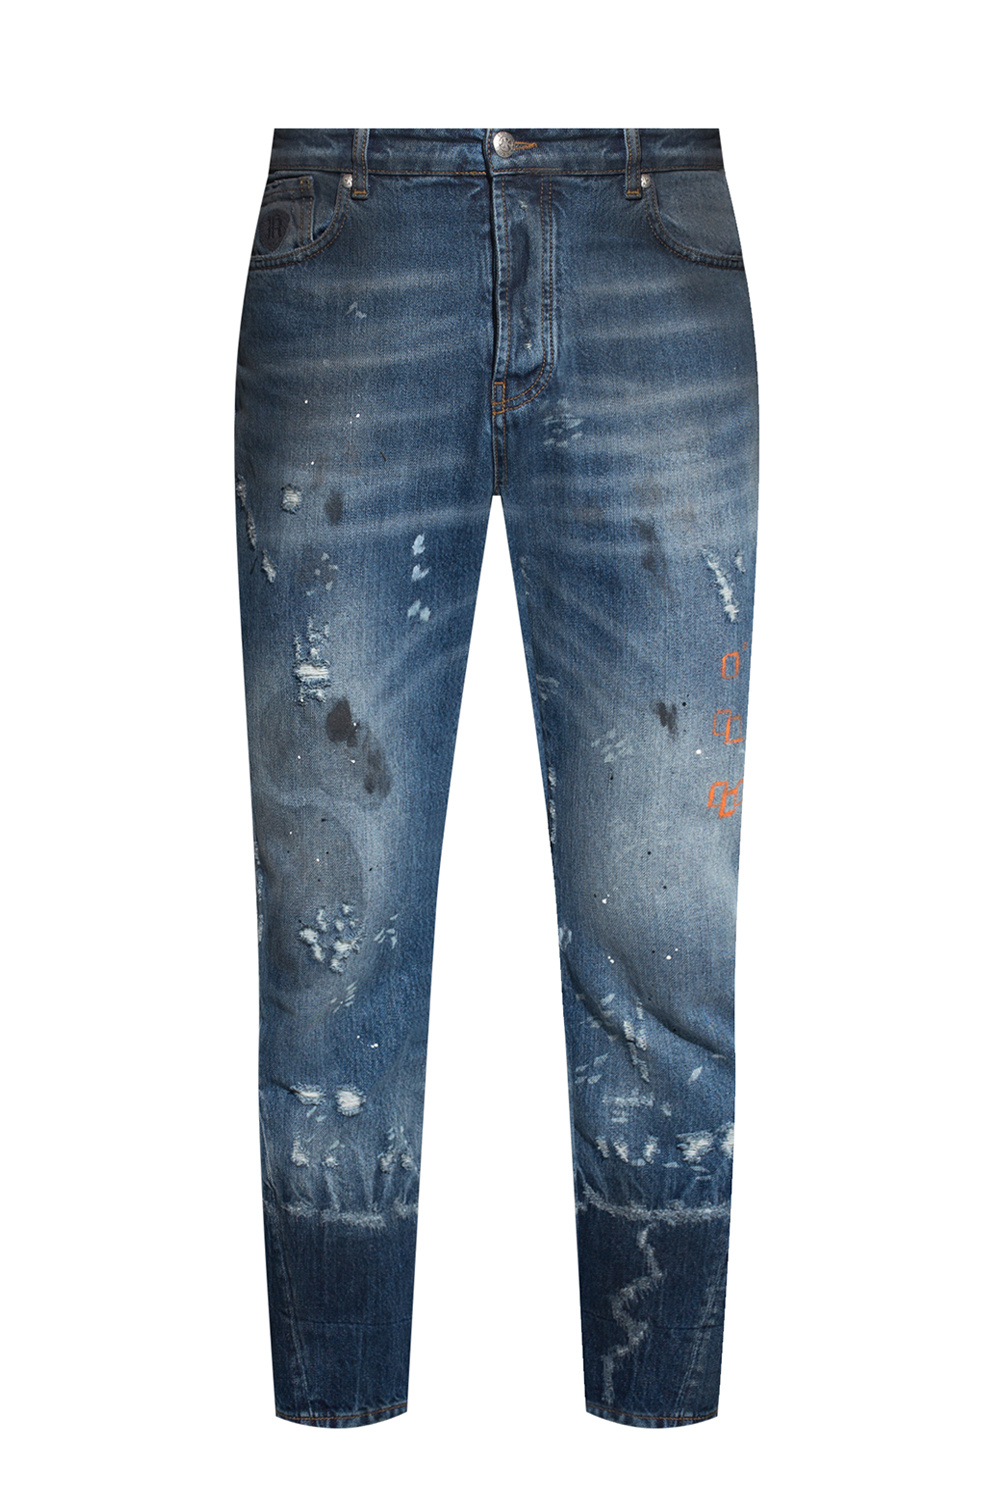 John Richmond Distressed jeans | Men's Clothing | Vitkac